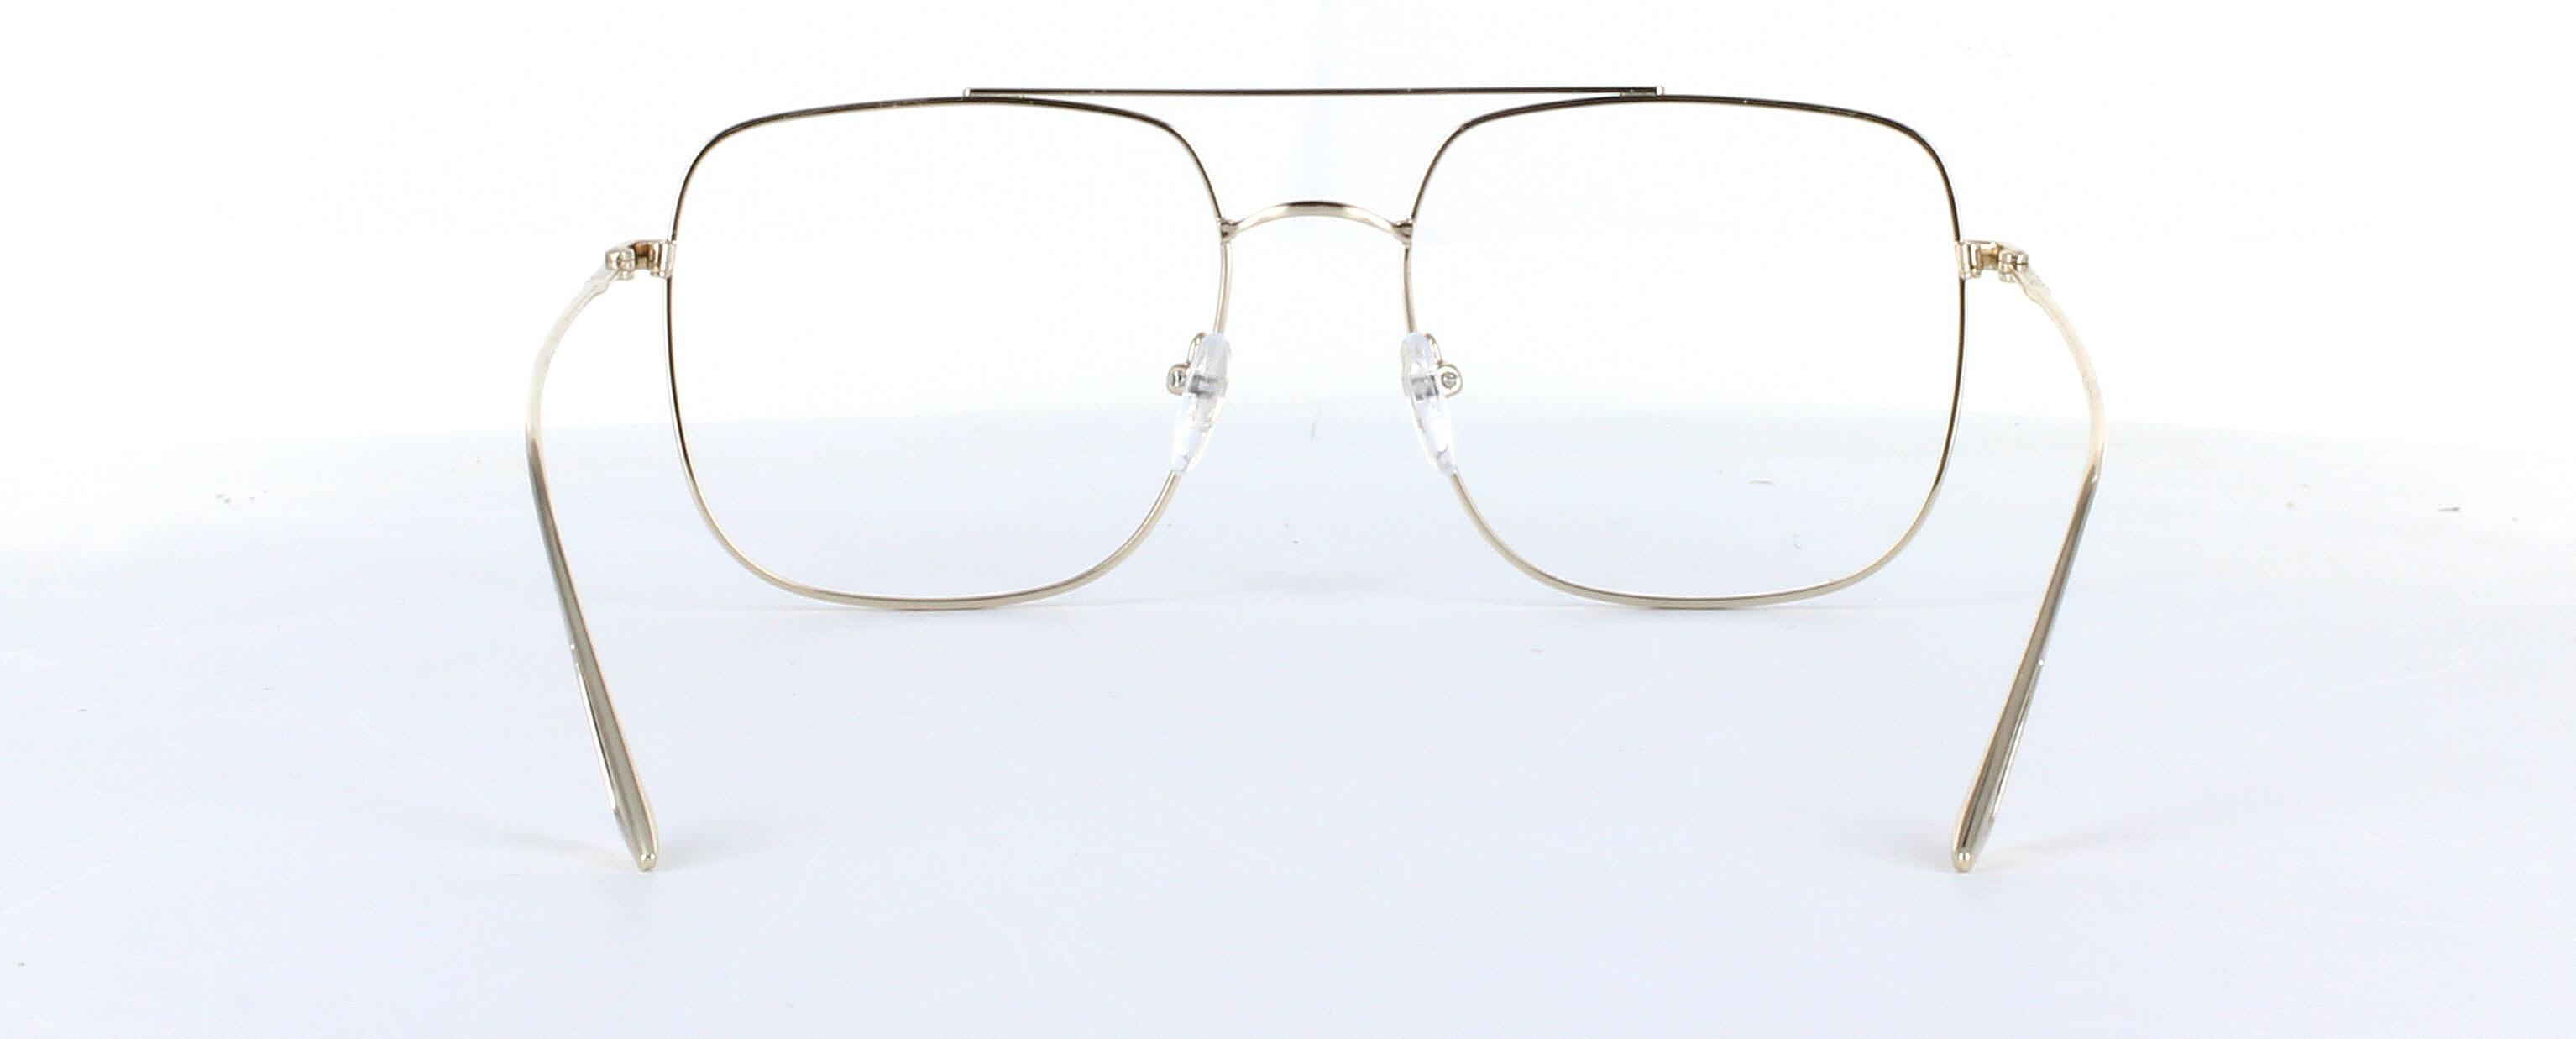 Eyecroxx 637 Grey Full Rim Aviator Metal Glasses - Image View 3